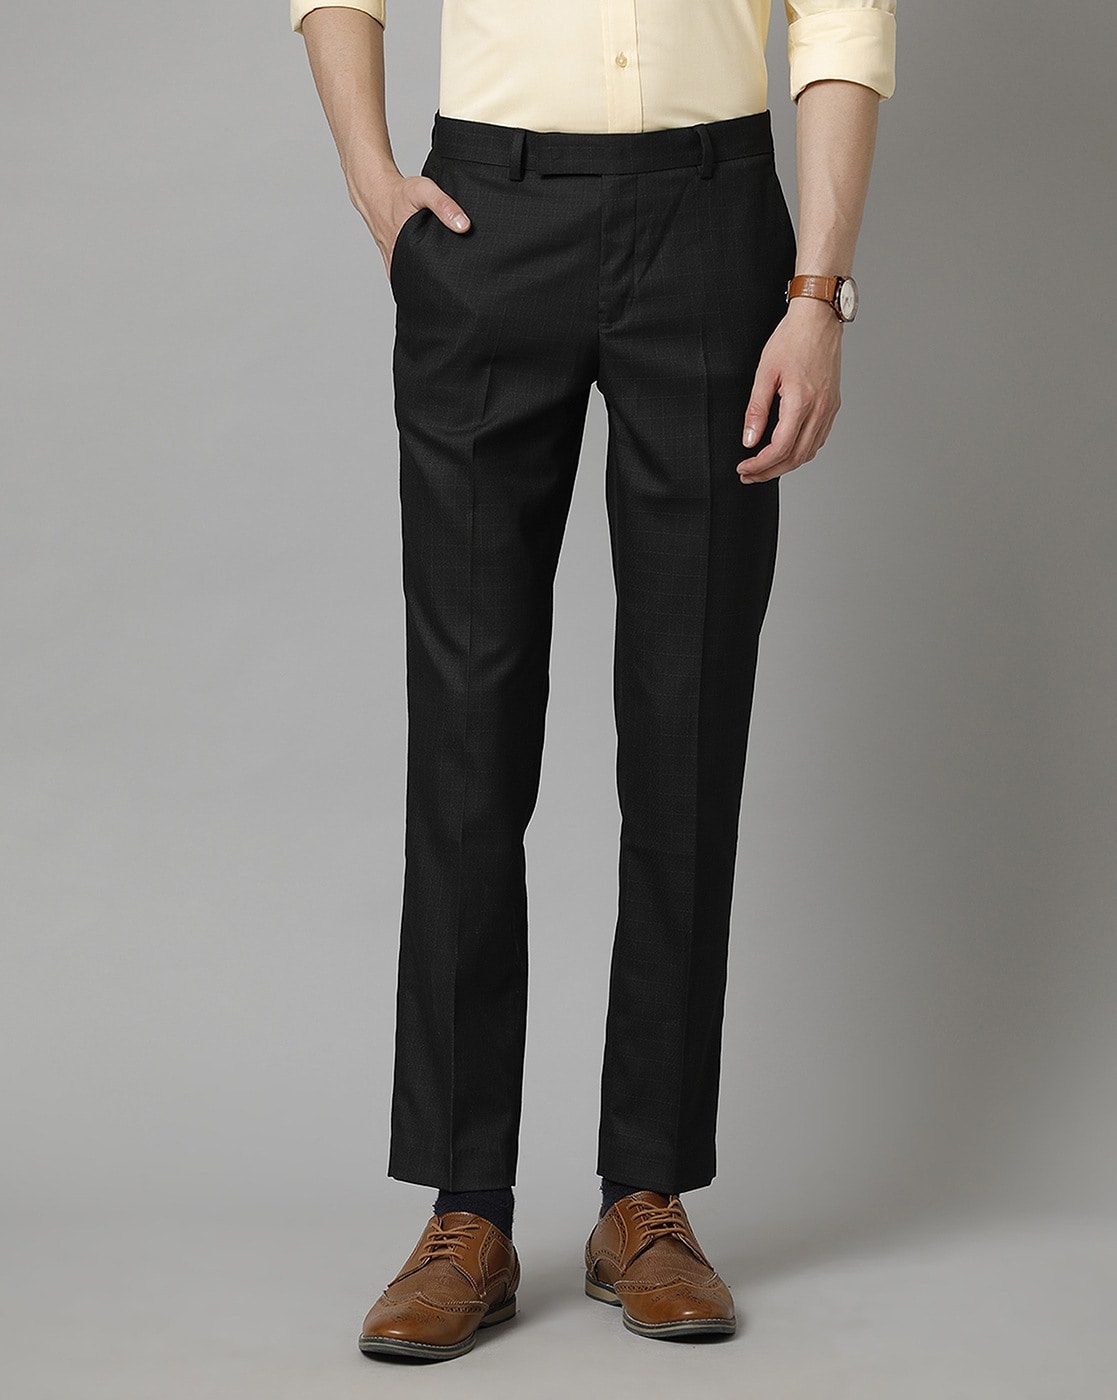 WiHiCiQi Men's Slim Fit Business Black Dress Pants Formal Pants Slacks  Wedding Tuxedos Party Office Work(Only Pants) at Amazon Men's Clothing store